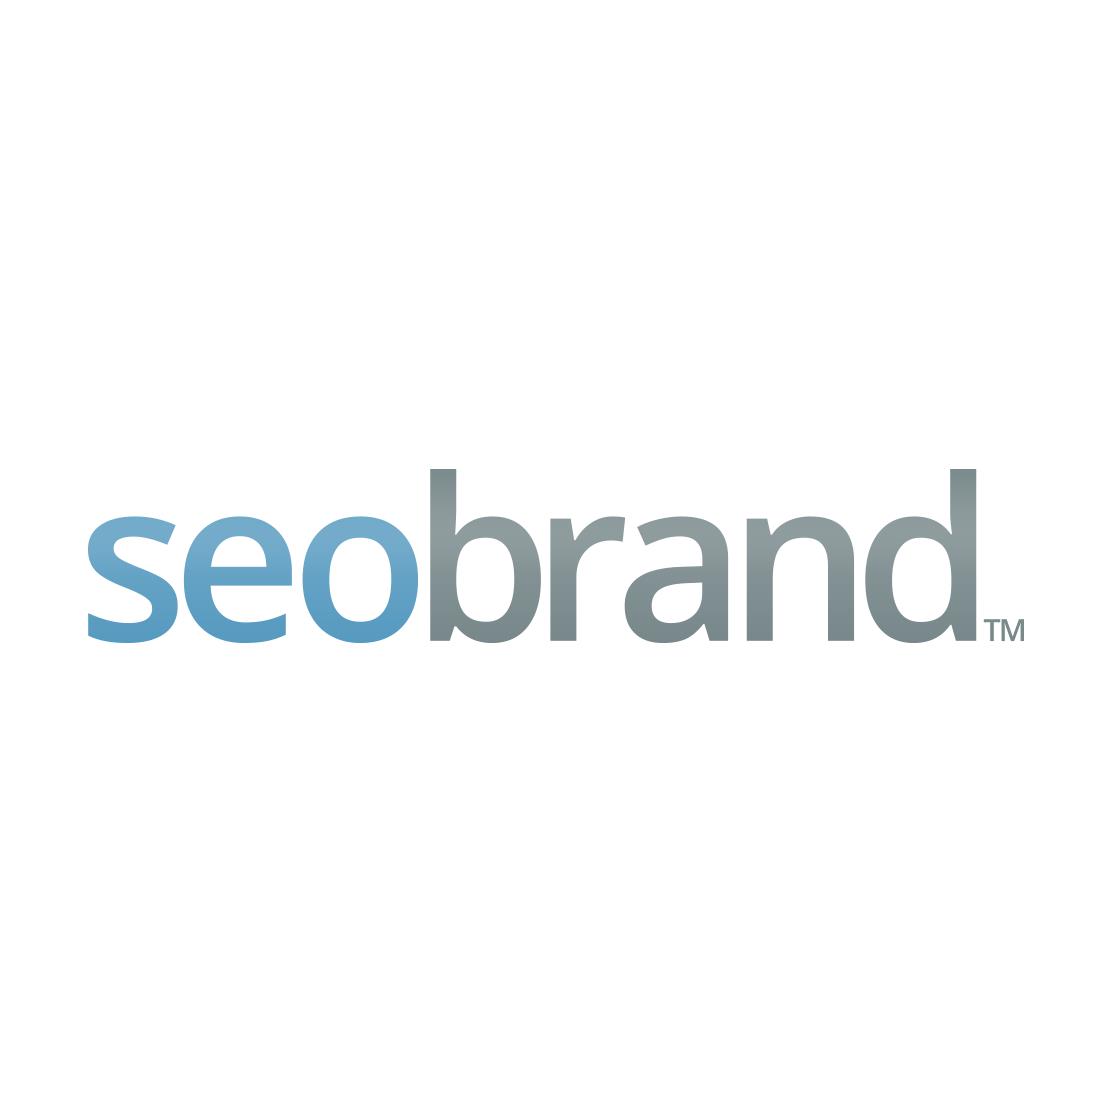 Top New York SEO Agency Logo: SEO Brand